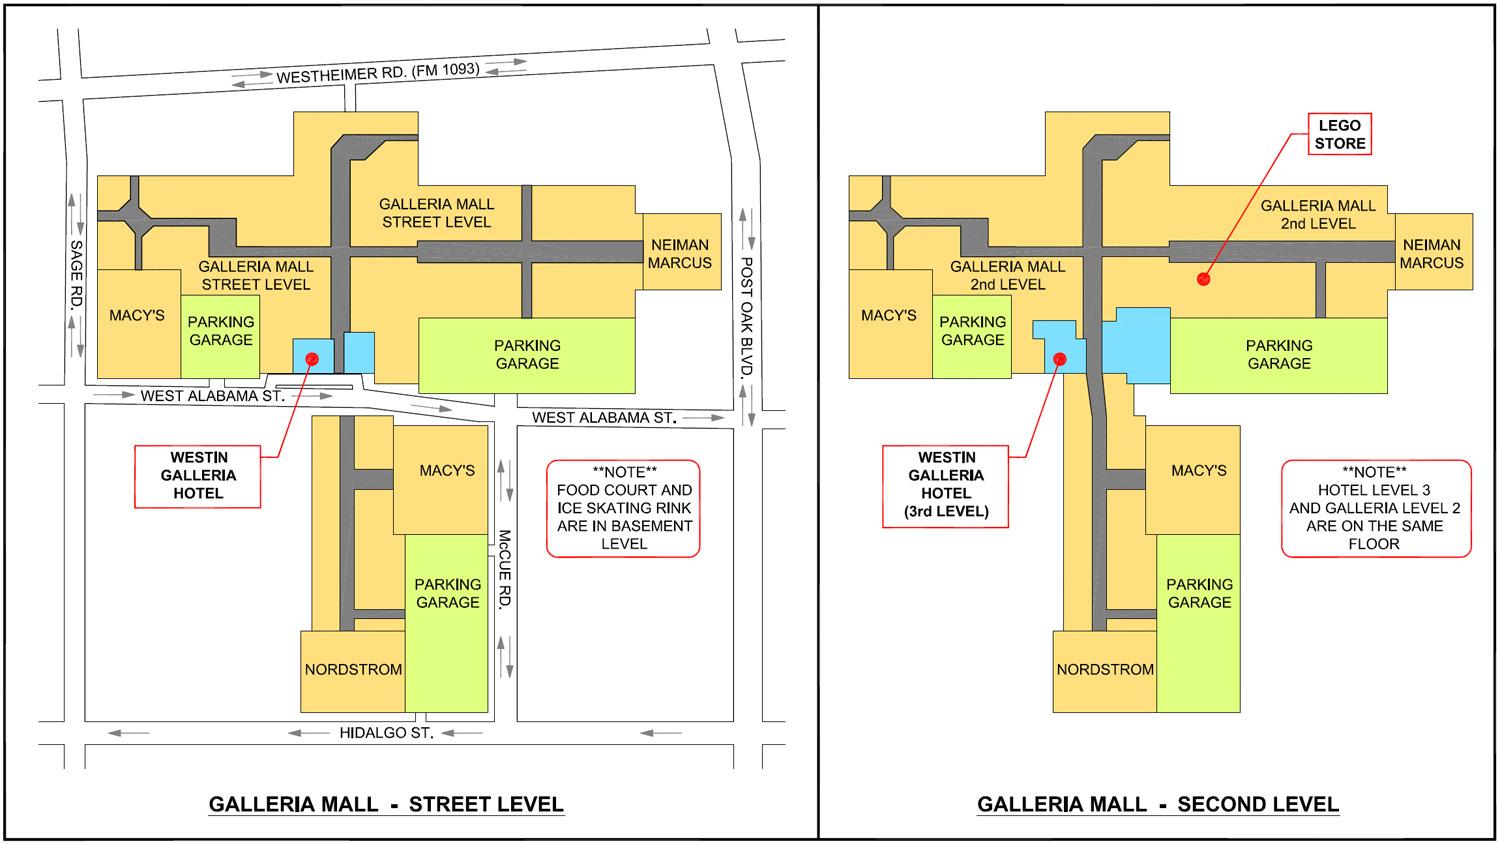 Galleria Mall Map 